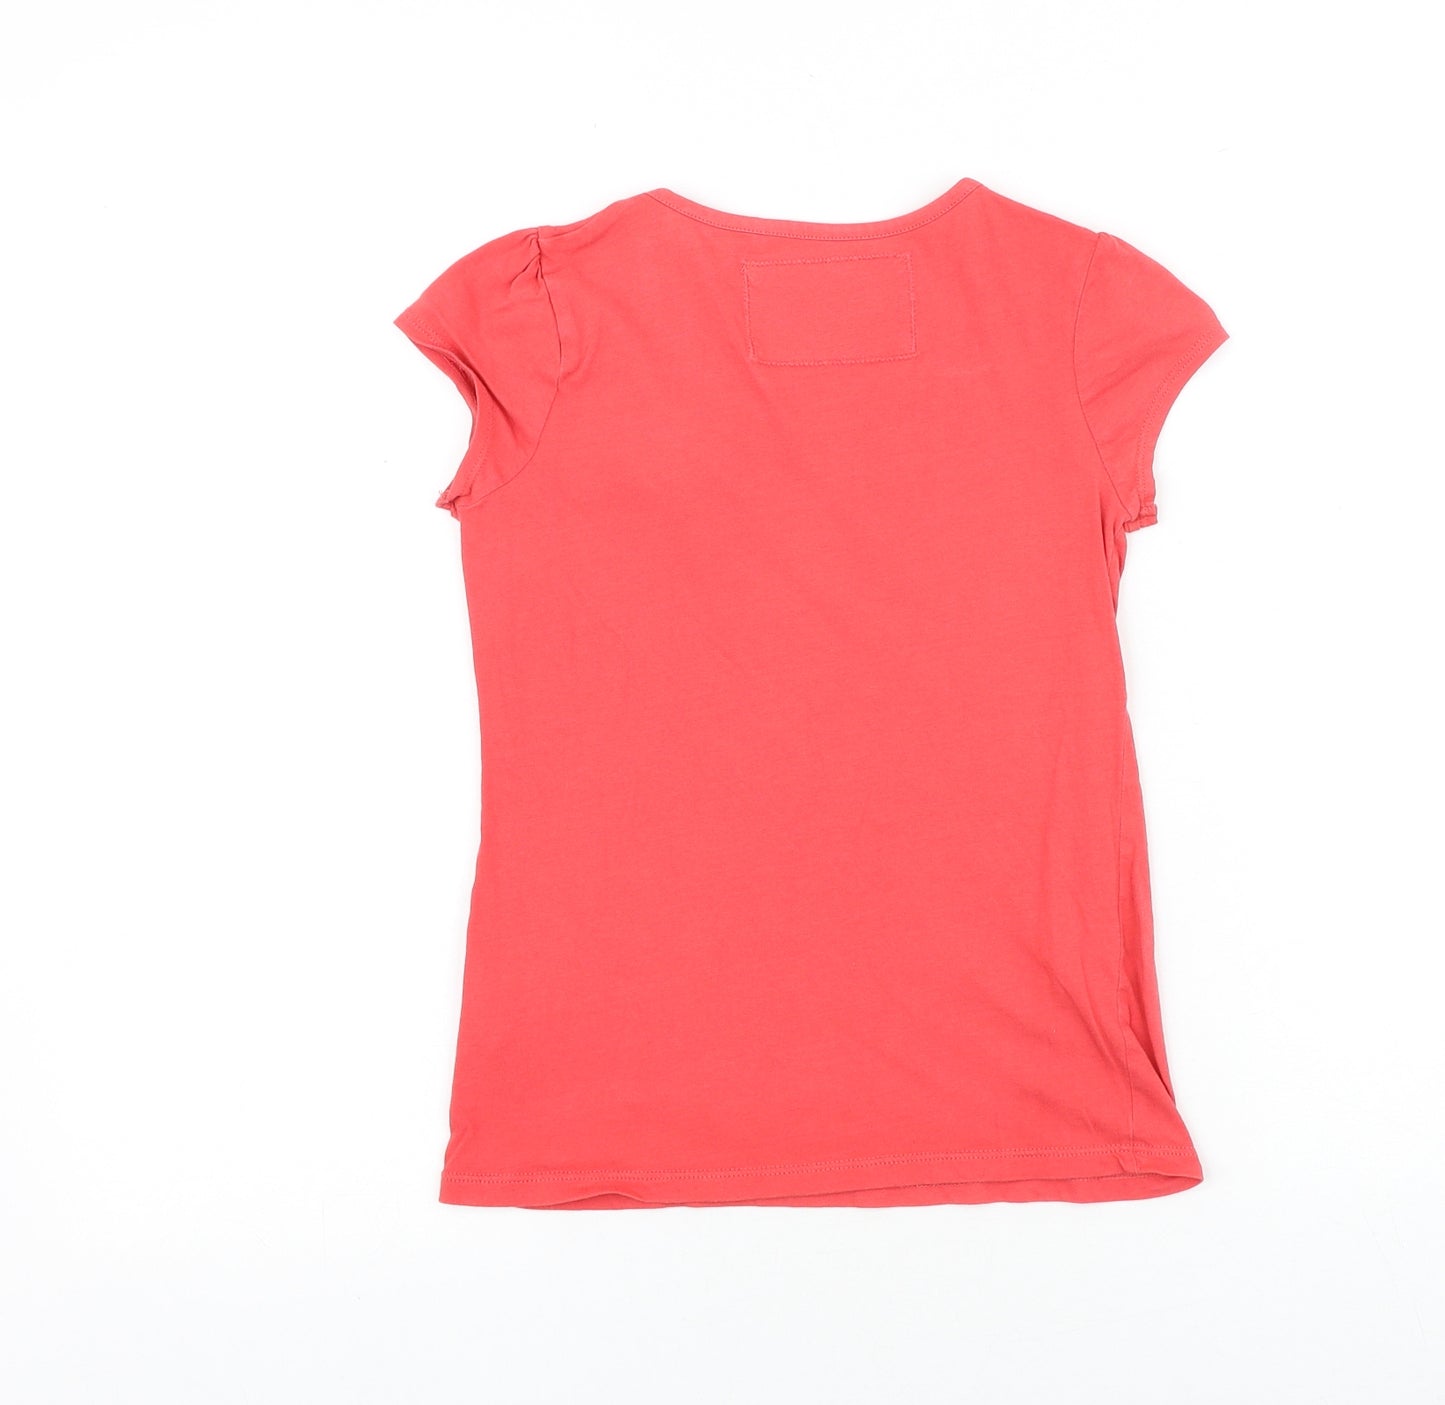 NEXT Girls Pink 100% Cotton Basic T-Shirt Size 9 Years Round Neck Pullover - Flower Detail